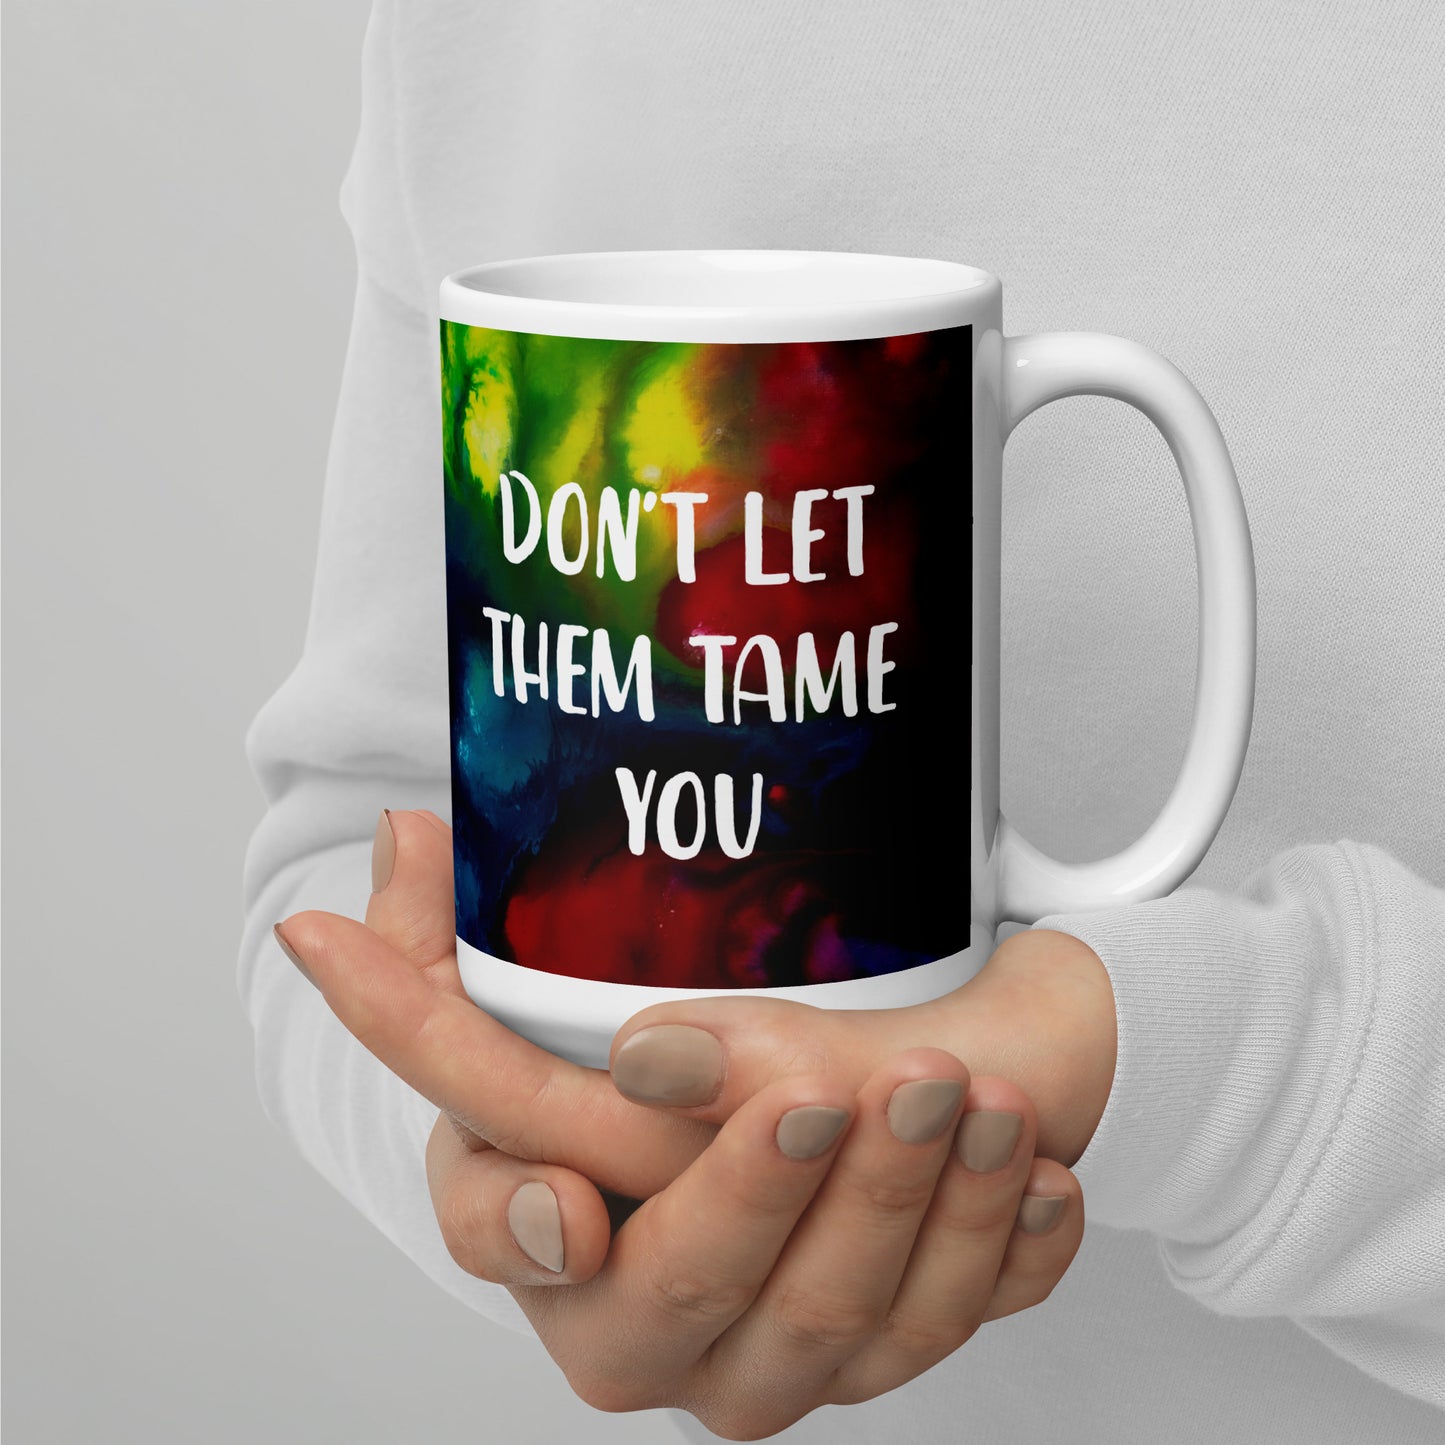 Don't Let Them Tame You Ceramic Mug 2 sizes